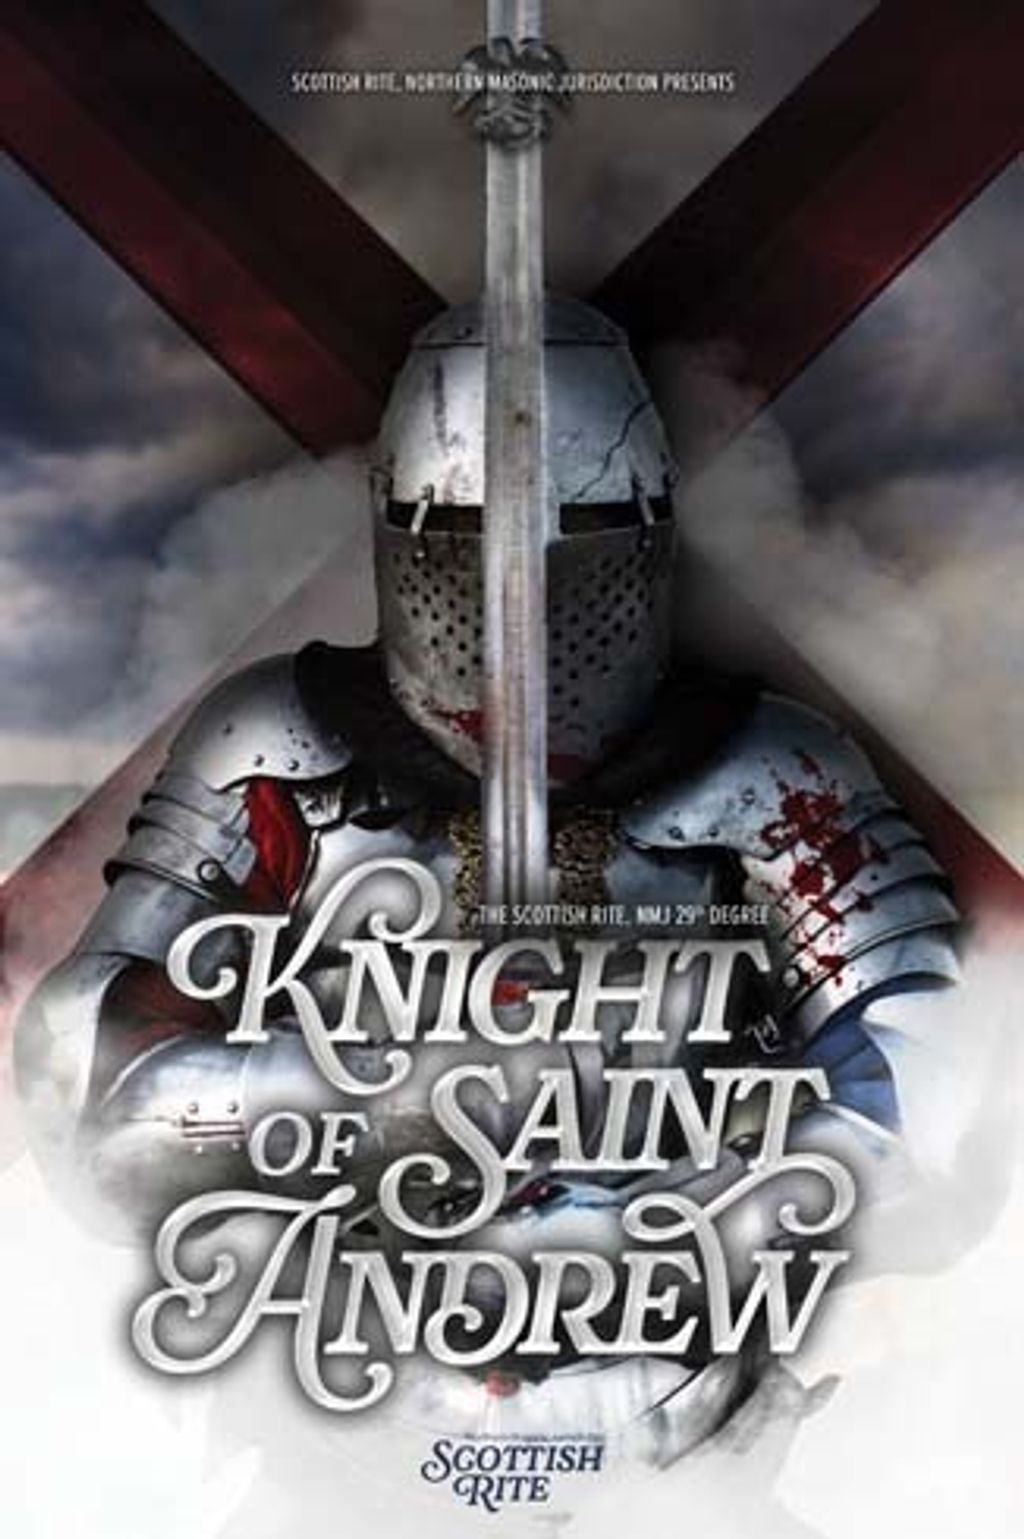 Scottish Rite, NMJ 29th Degree: Knight of Saint Andrew poster